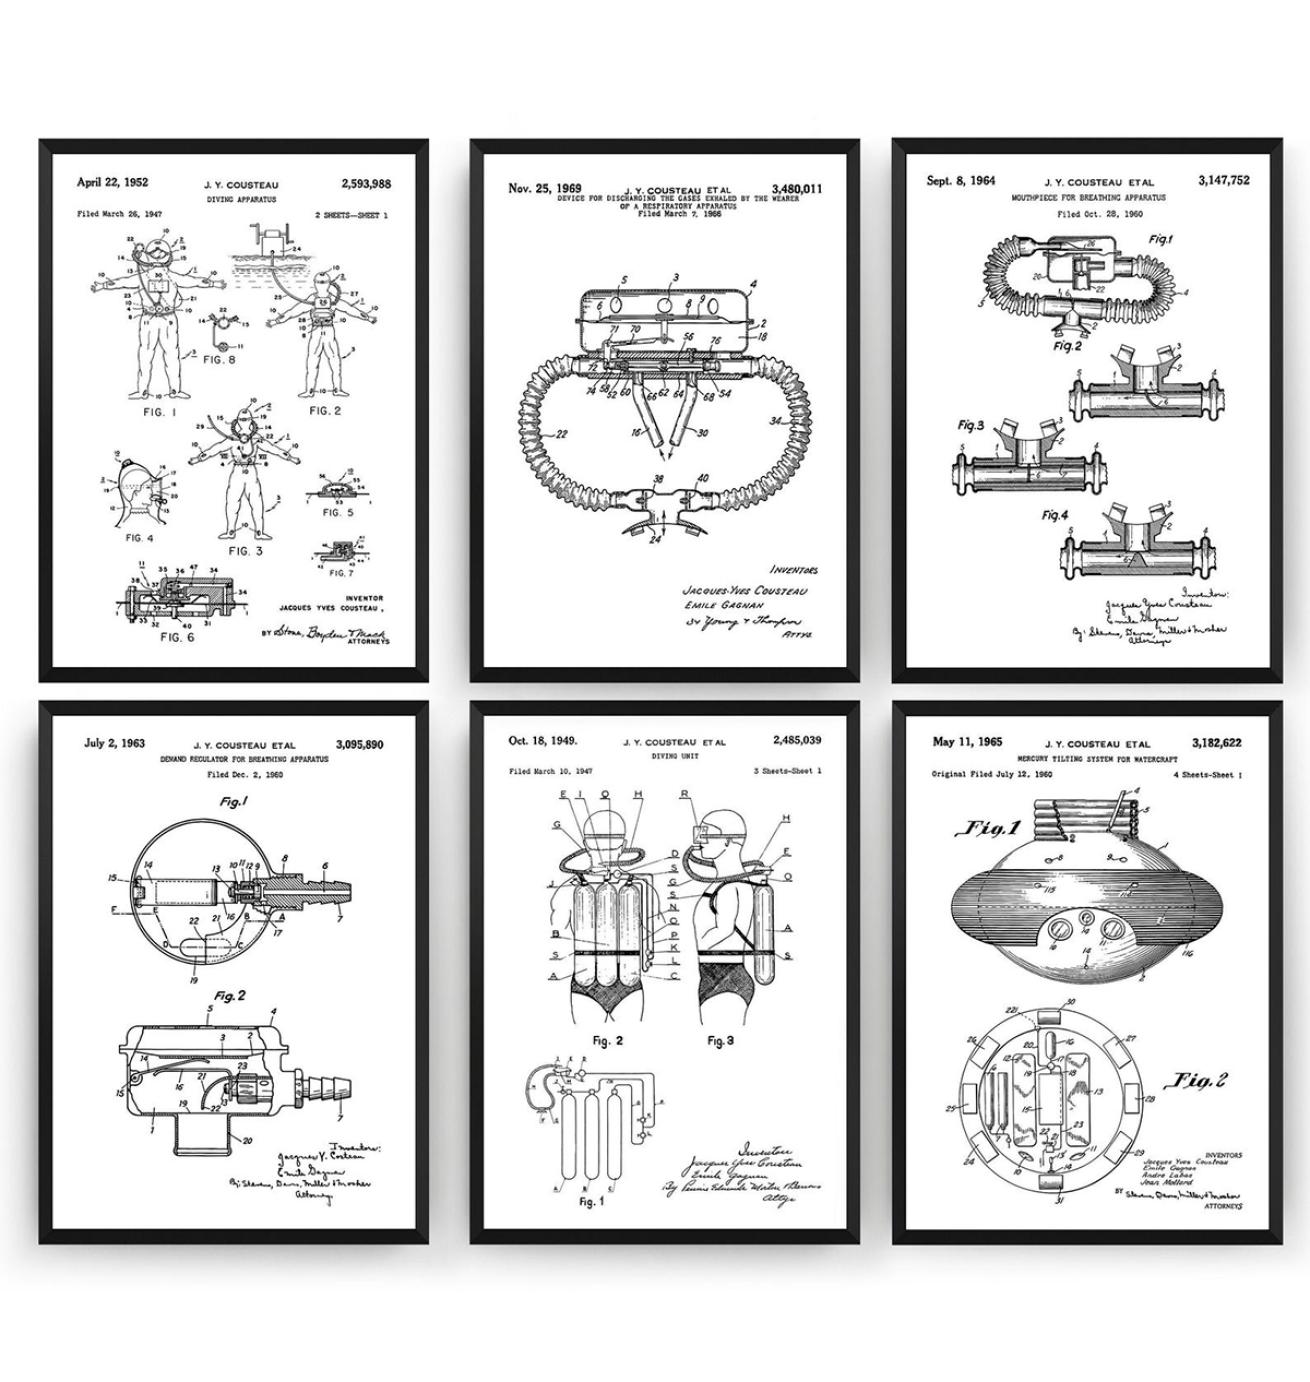 Scuba gear patent prints